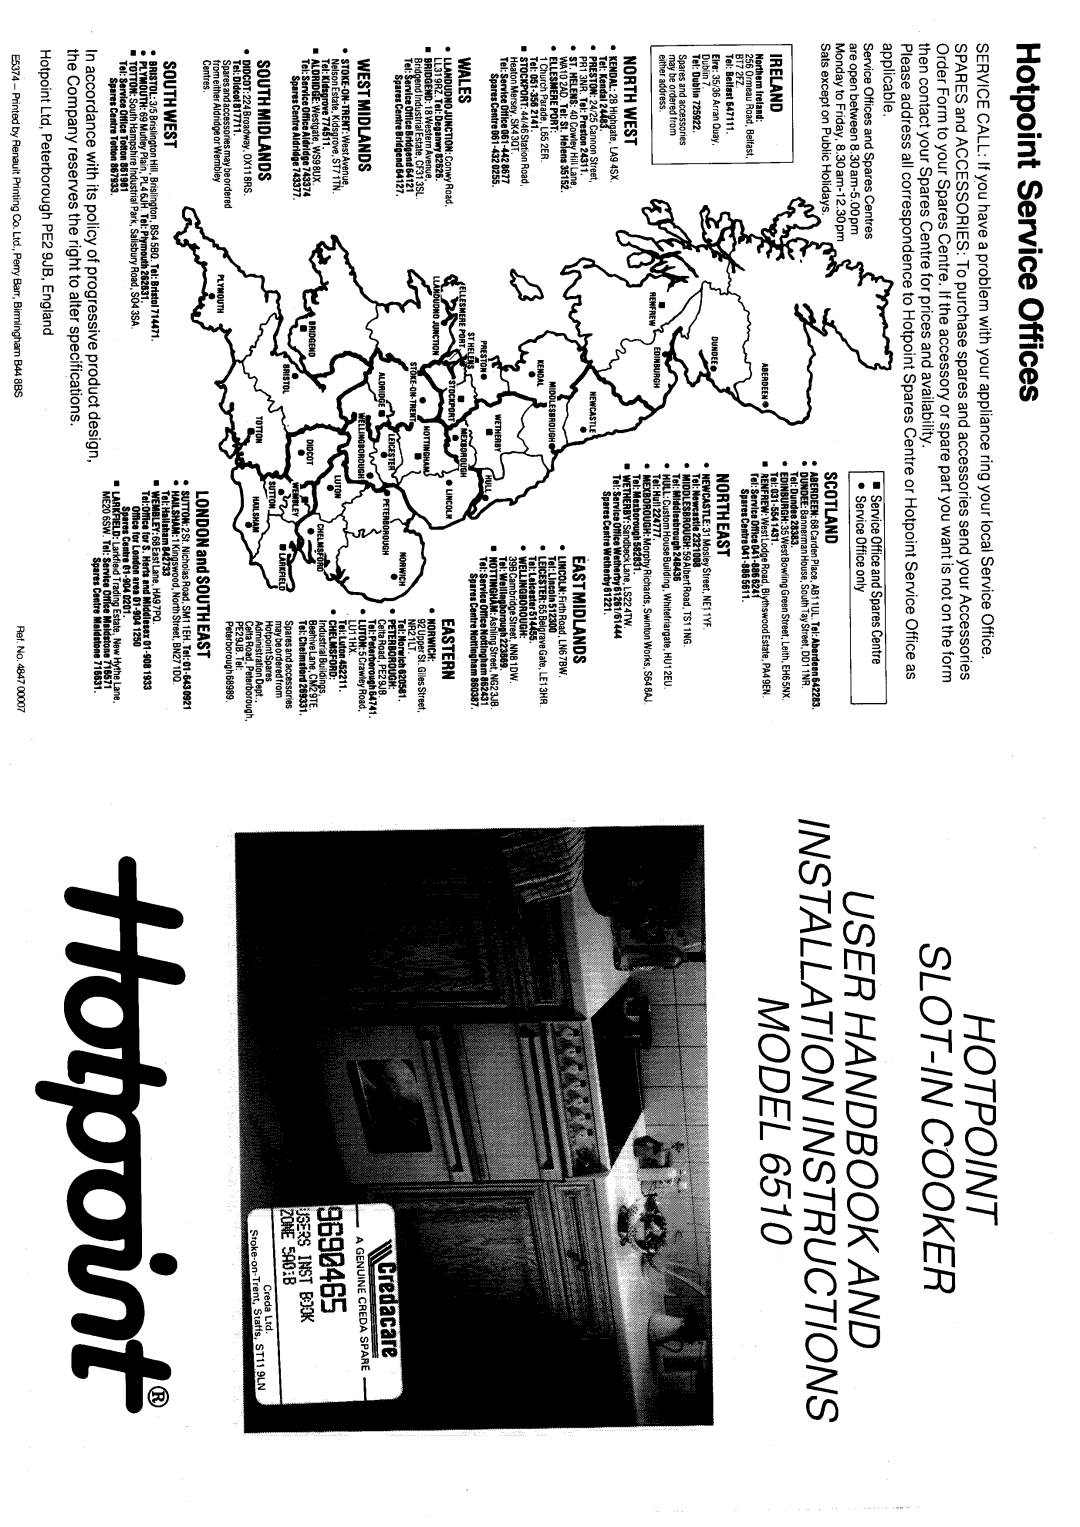 Hotpoint 6510 manual 